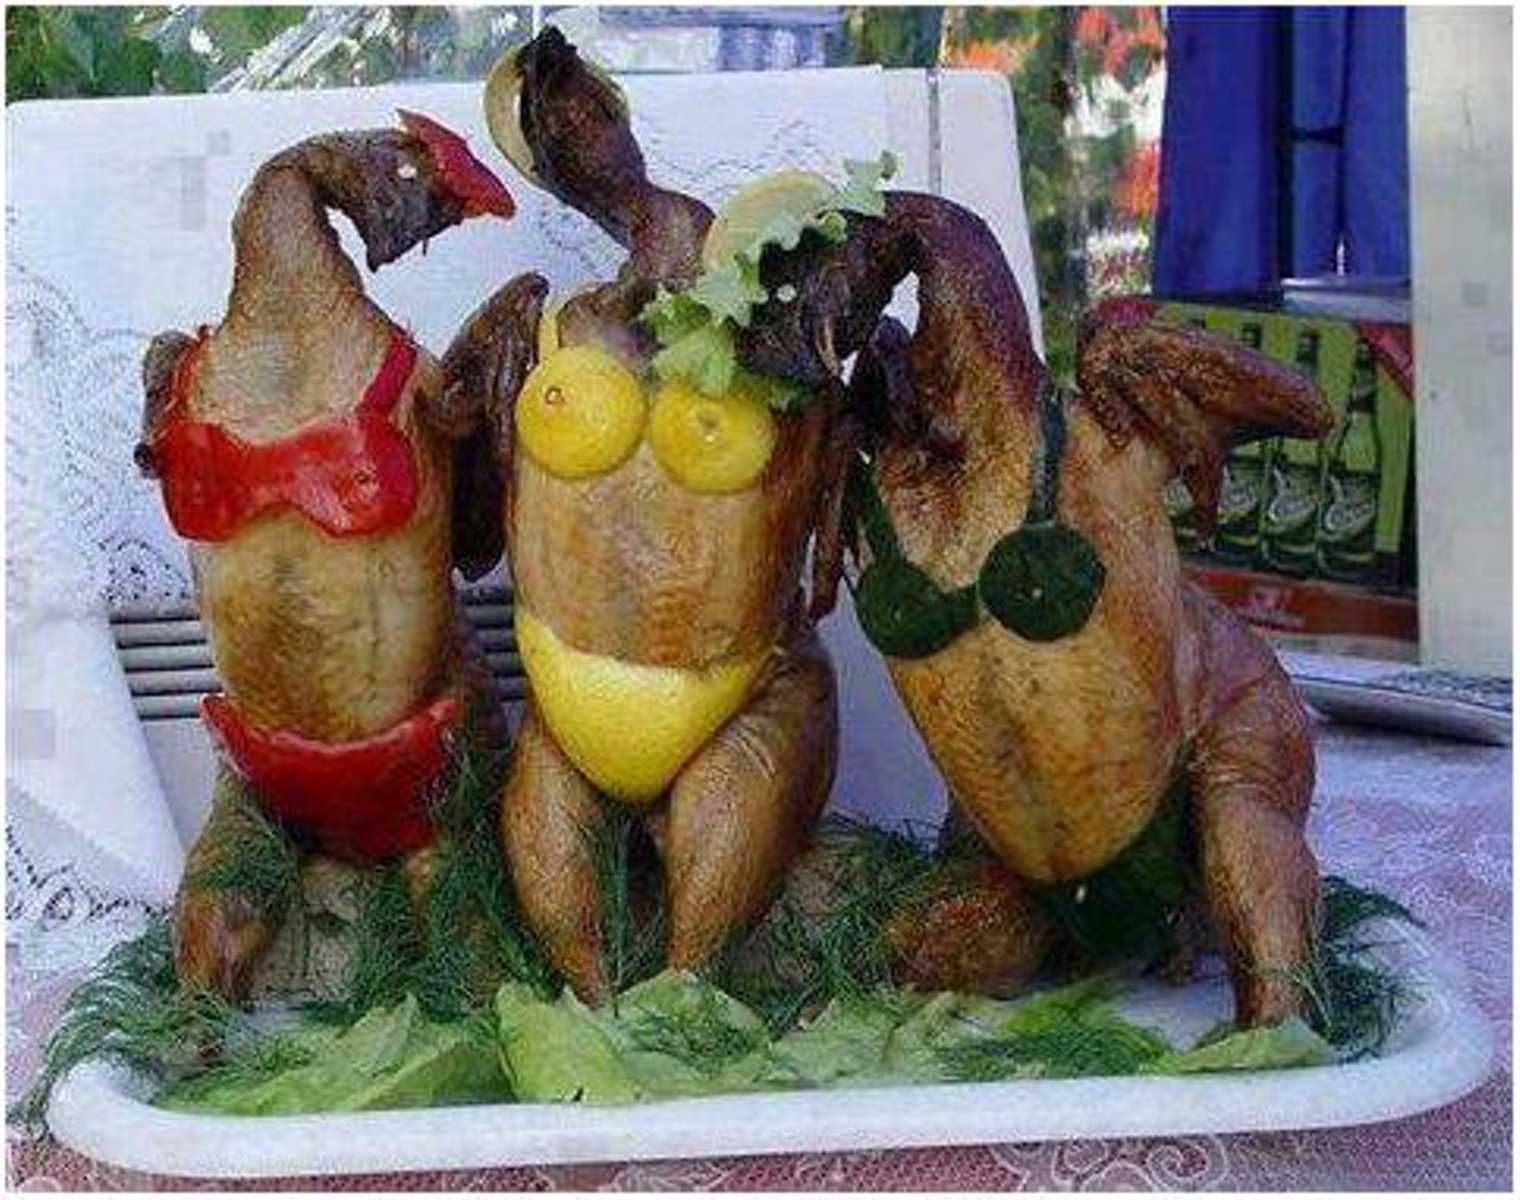 auto-fried-chickens-bikini-food-301887.jpg